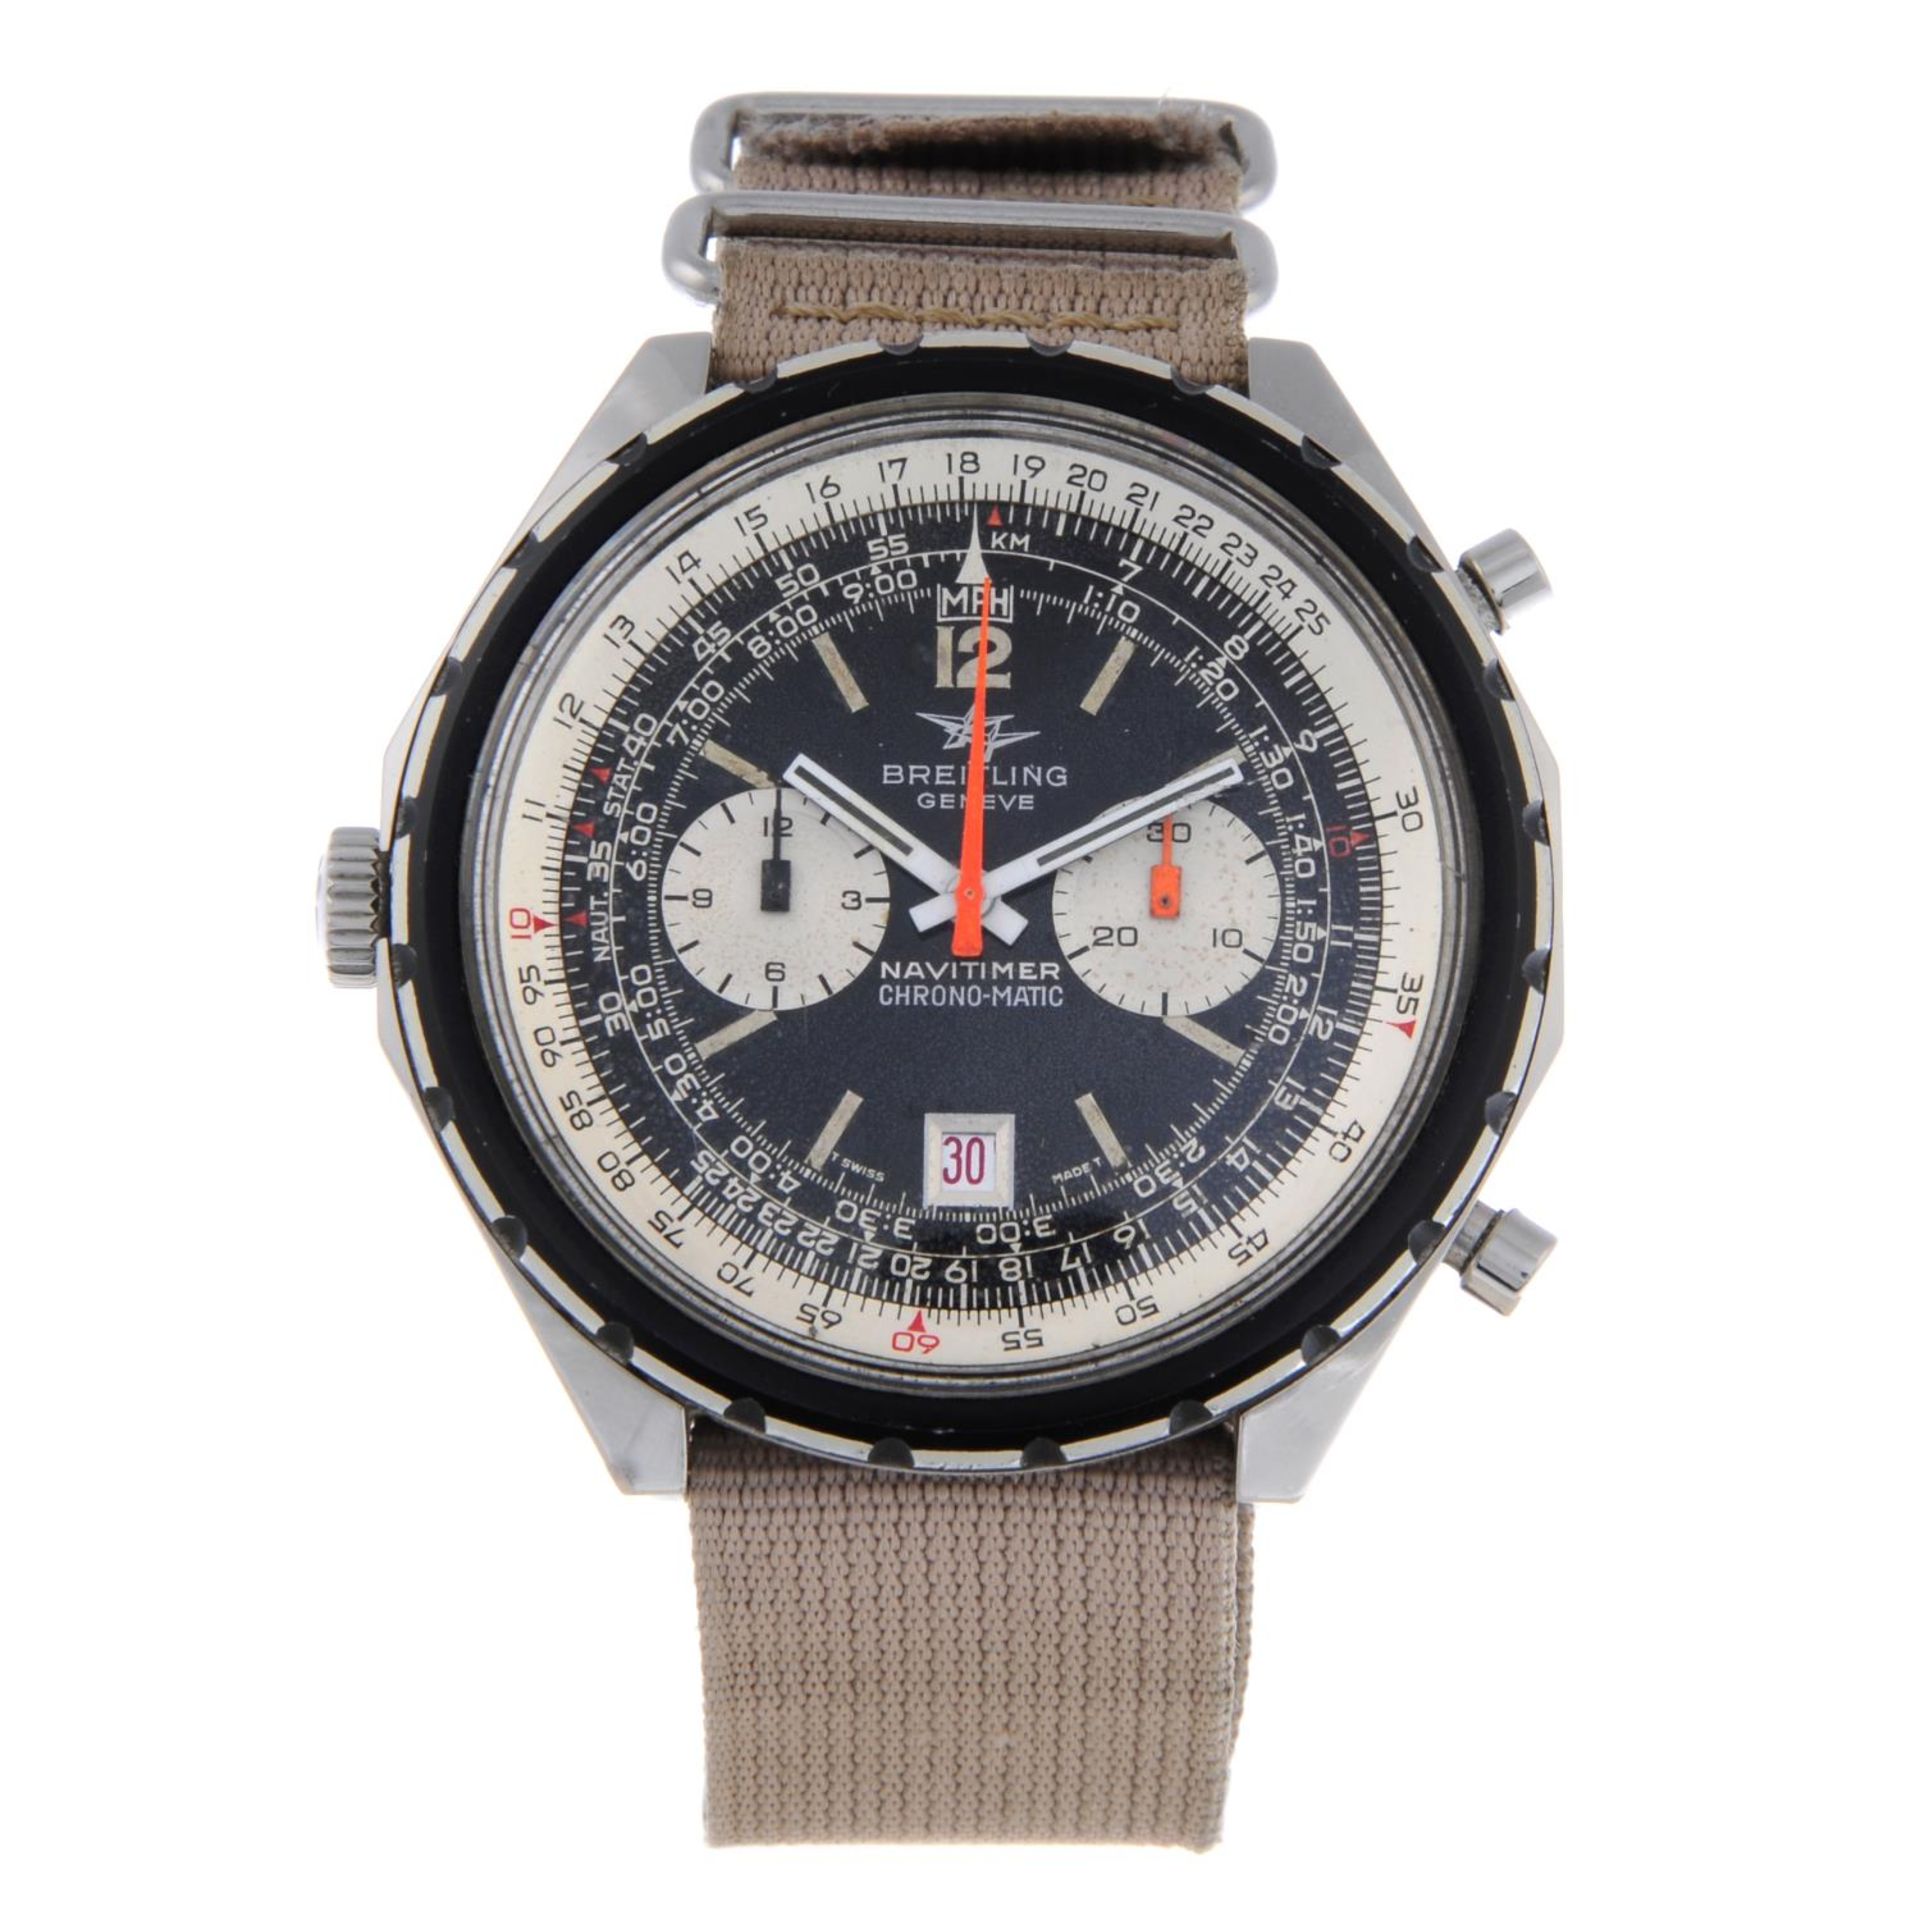 BREITLING - a gentleman's Navitimer Chrono-Matic chronograph wrist watch.